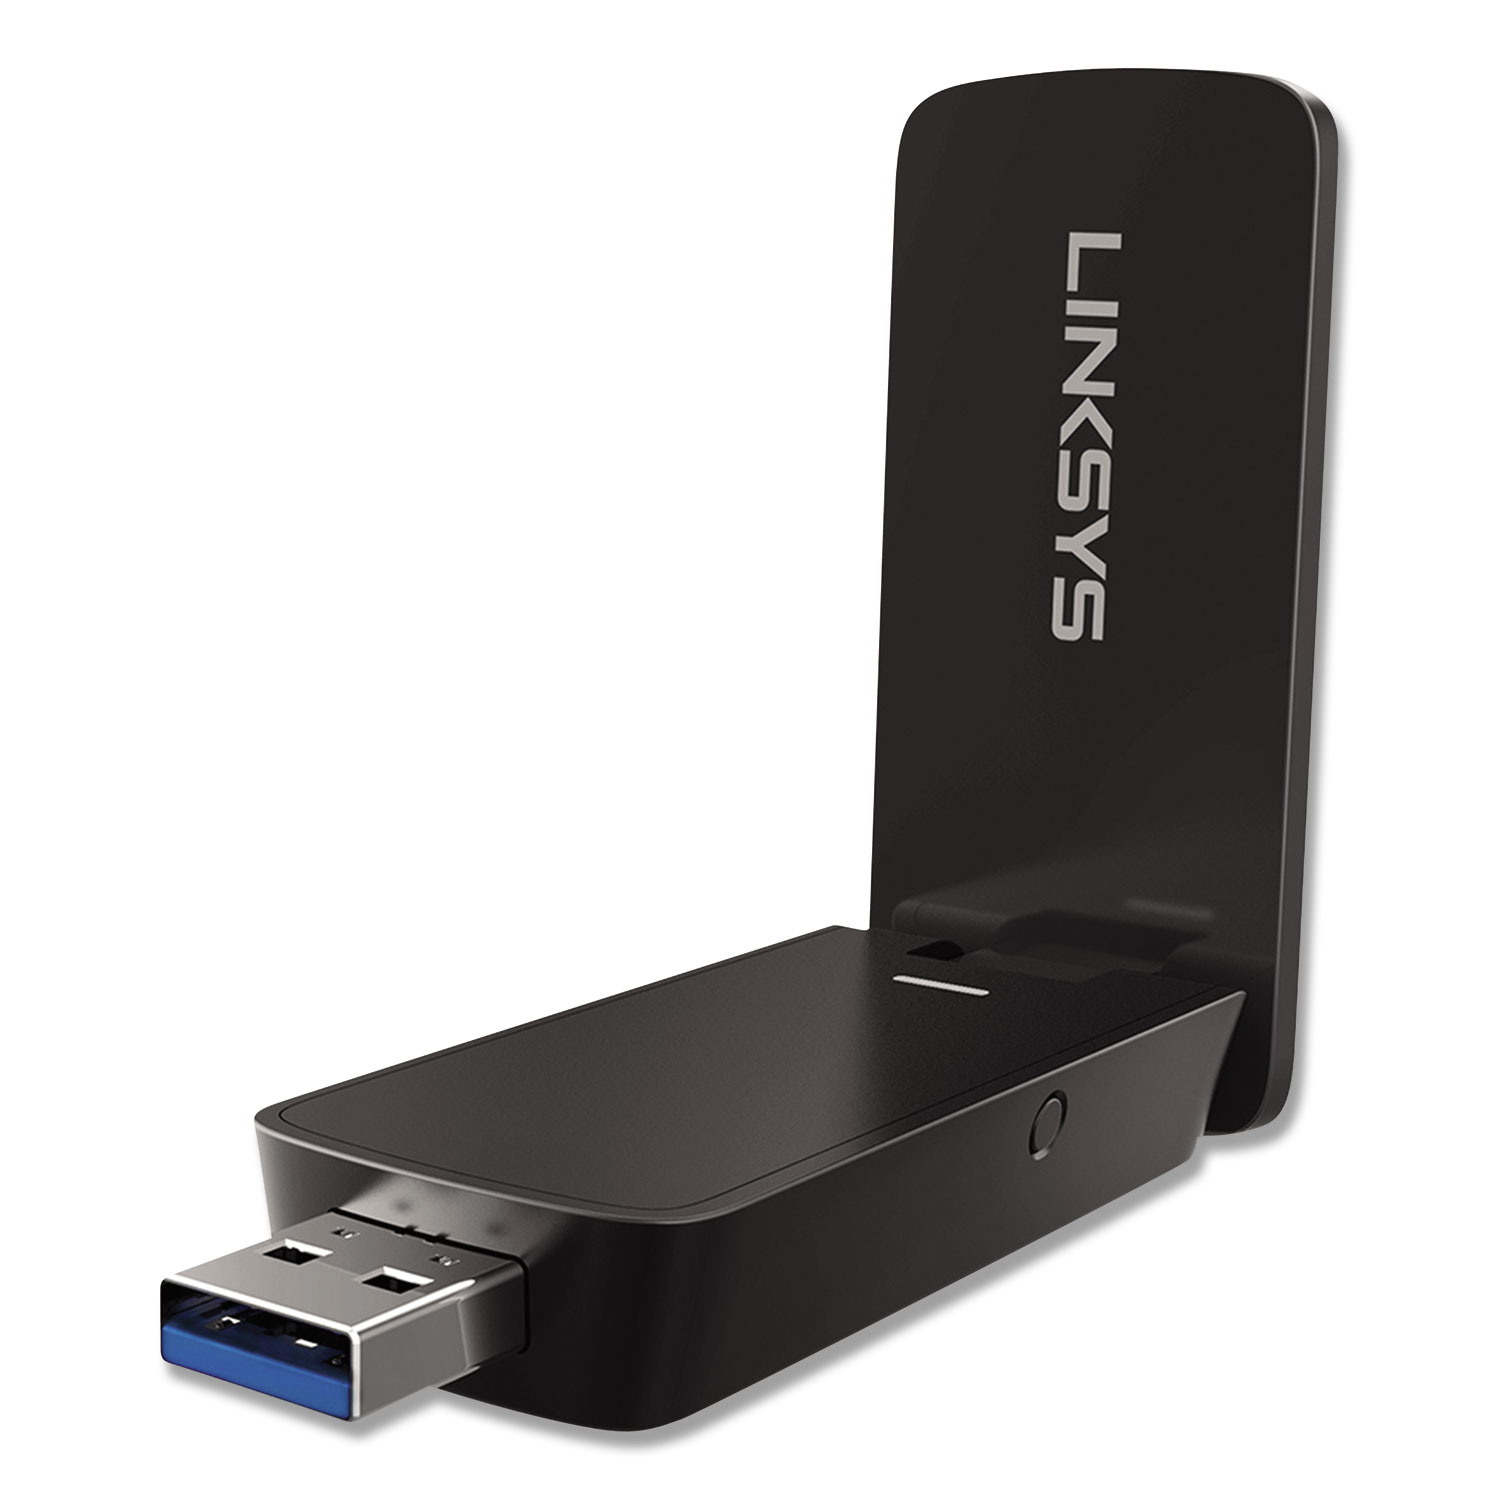  LINKSYS WUSB6400M WUSB6400M Max-Stream AC600 Wi-Fi USB Adapter, Laptop to Router (LNKWUSB6400M) 